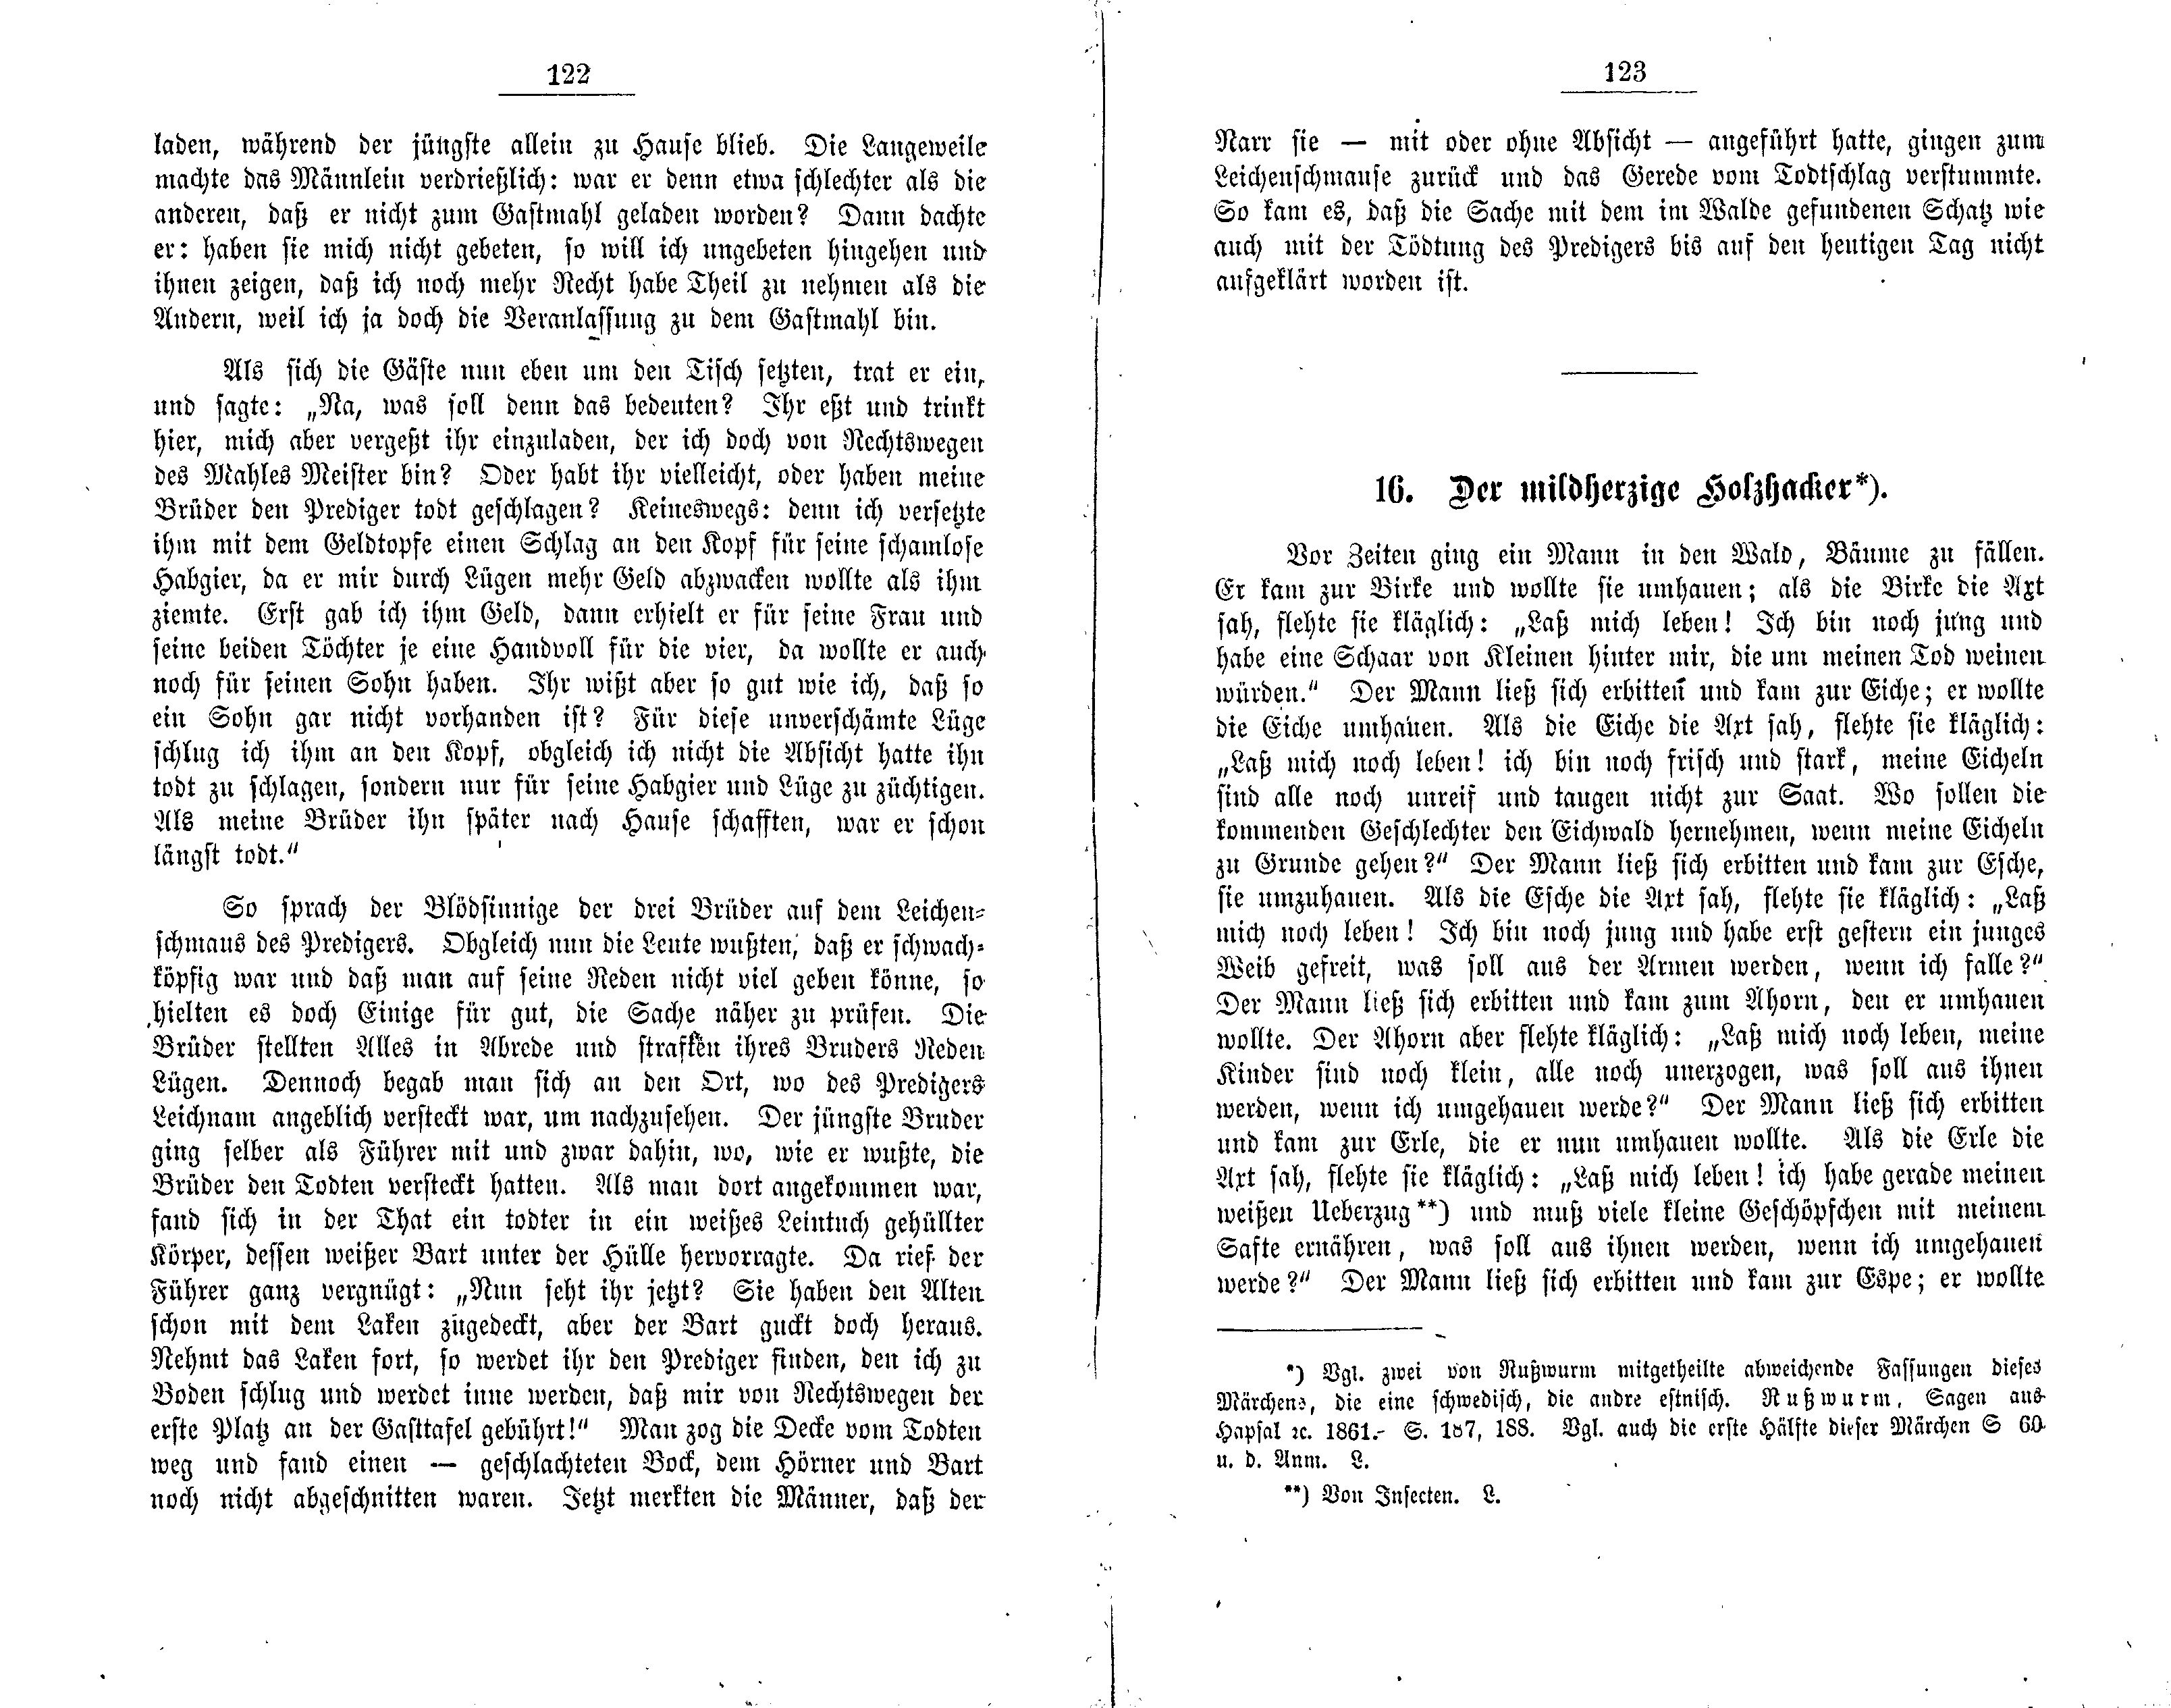 Der mildherzige Holzhacker (1881) | 1. (122-123) Основной текст